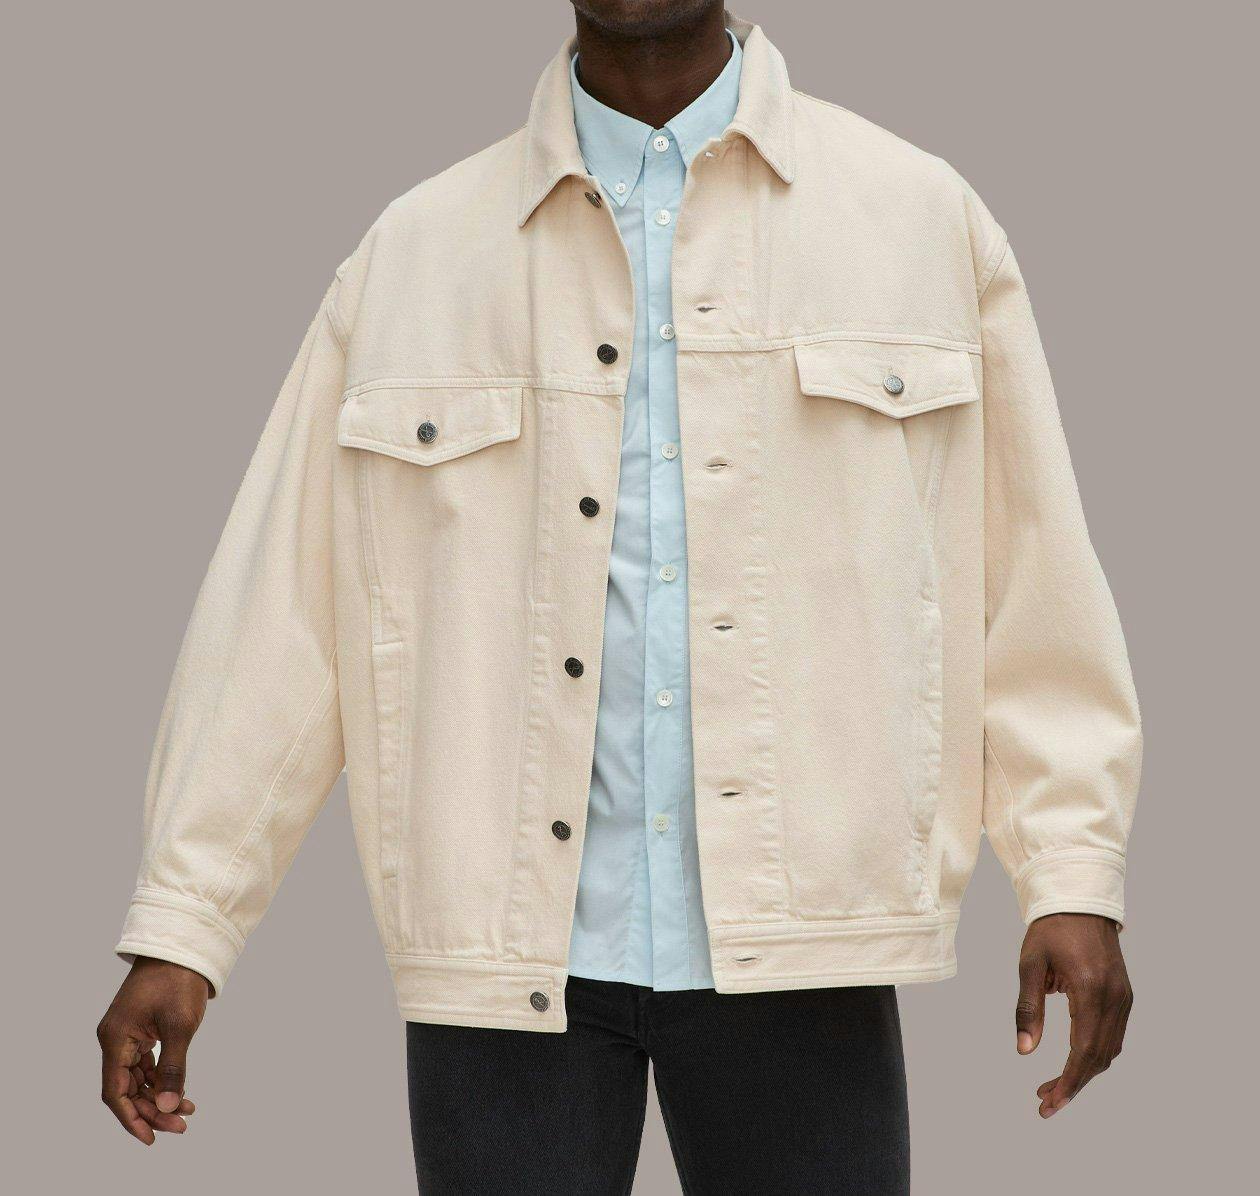 male model wearing sport jacket and sport shirt